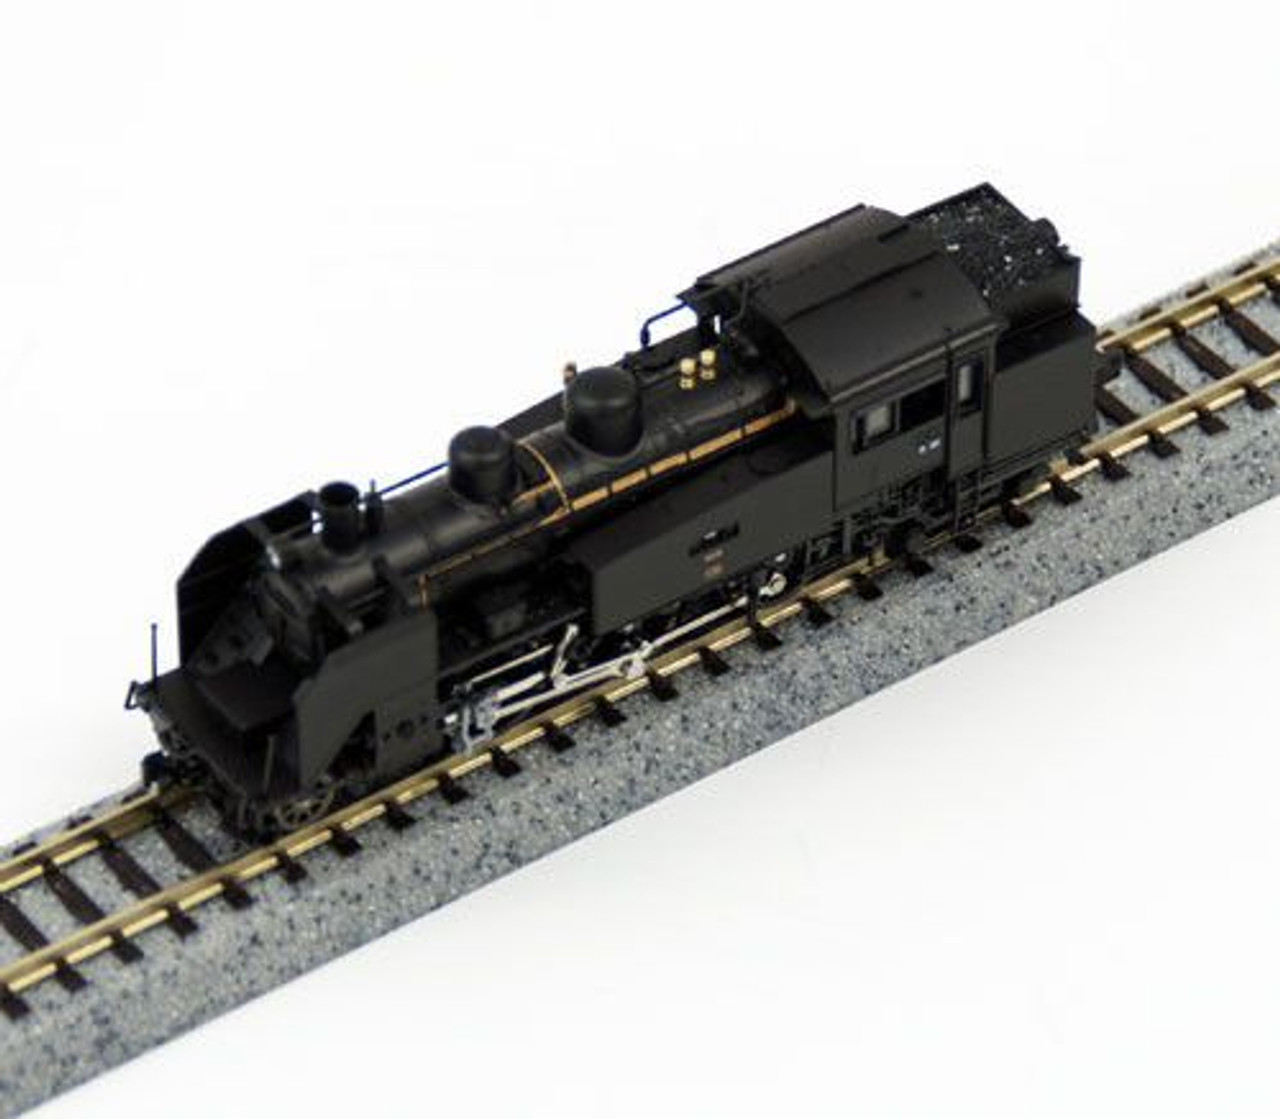 Nゲージ KATO C11 蒸気機関車 - 鉄道模型